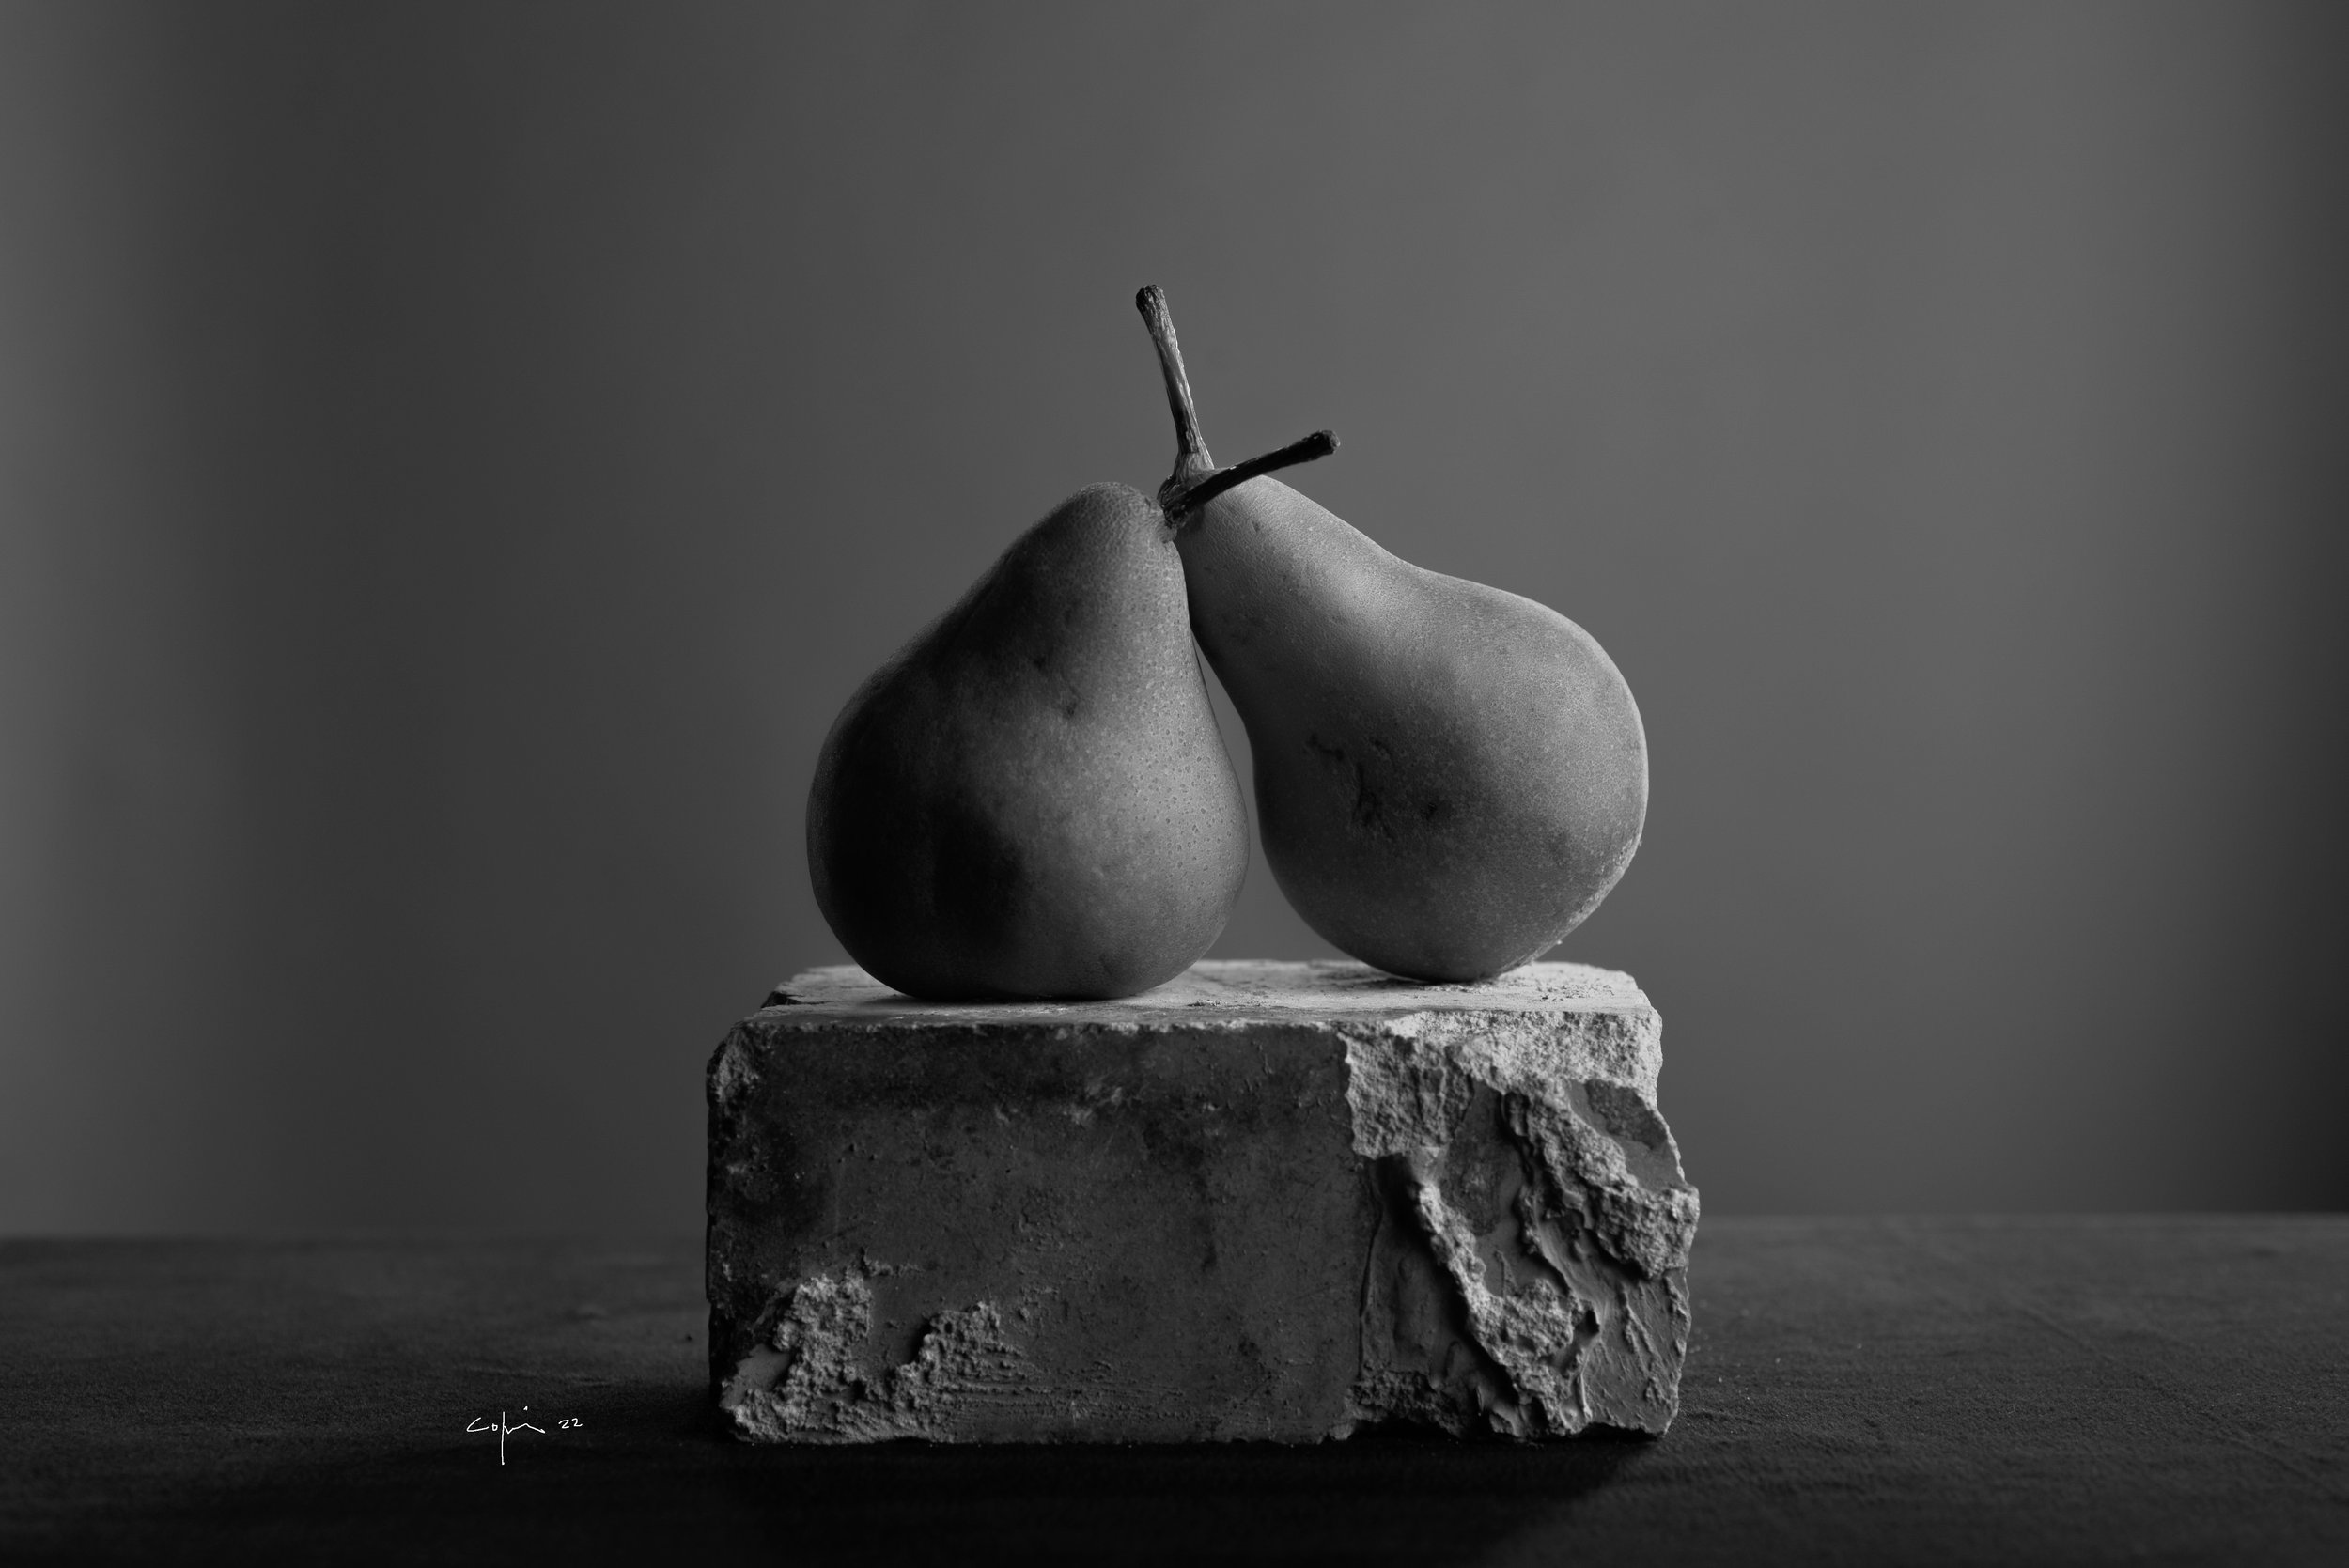 Pears in the Studio